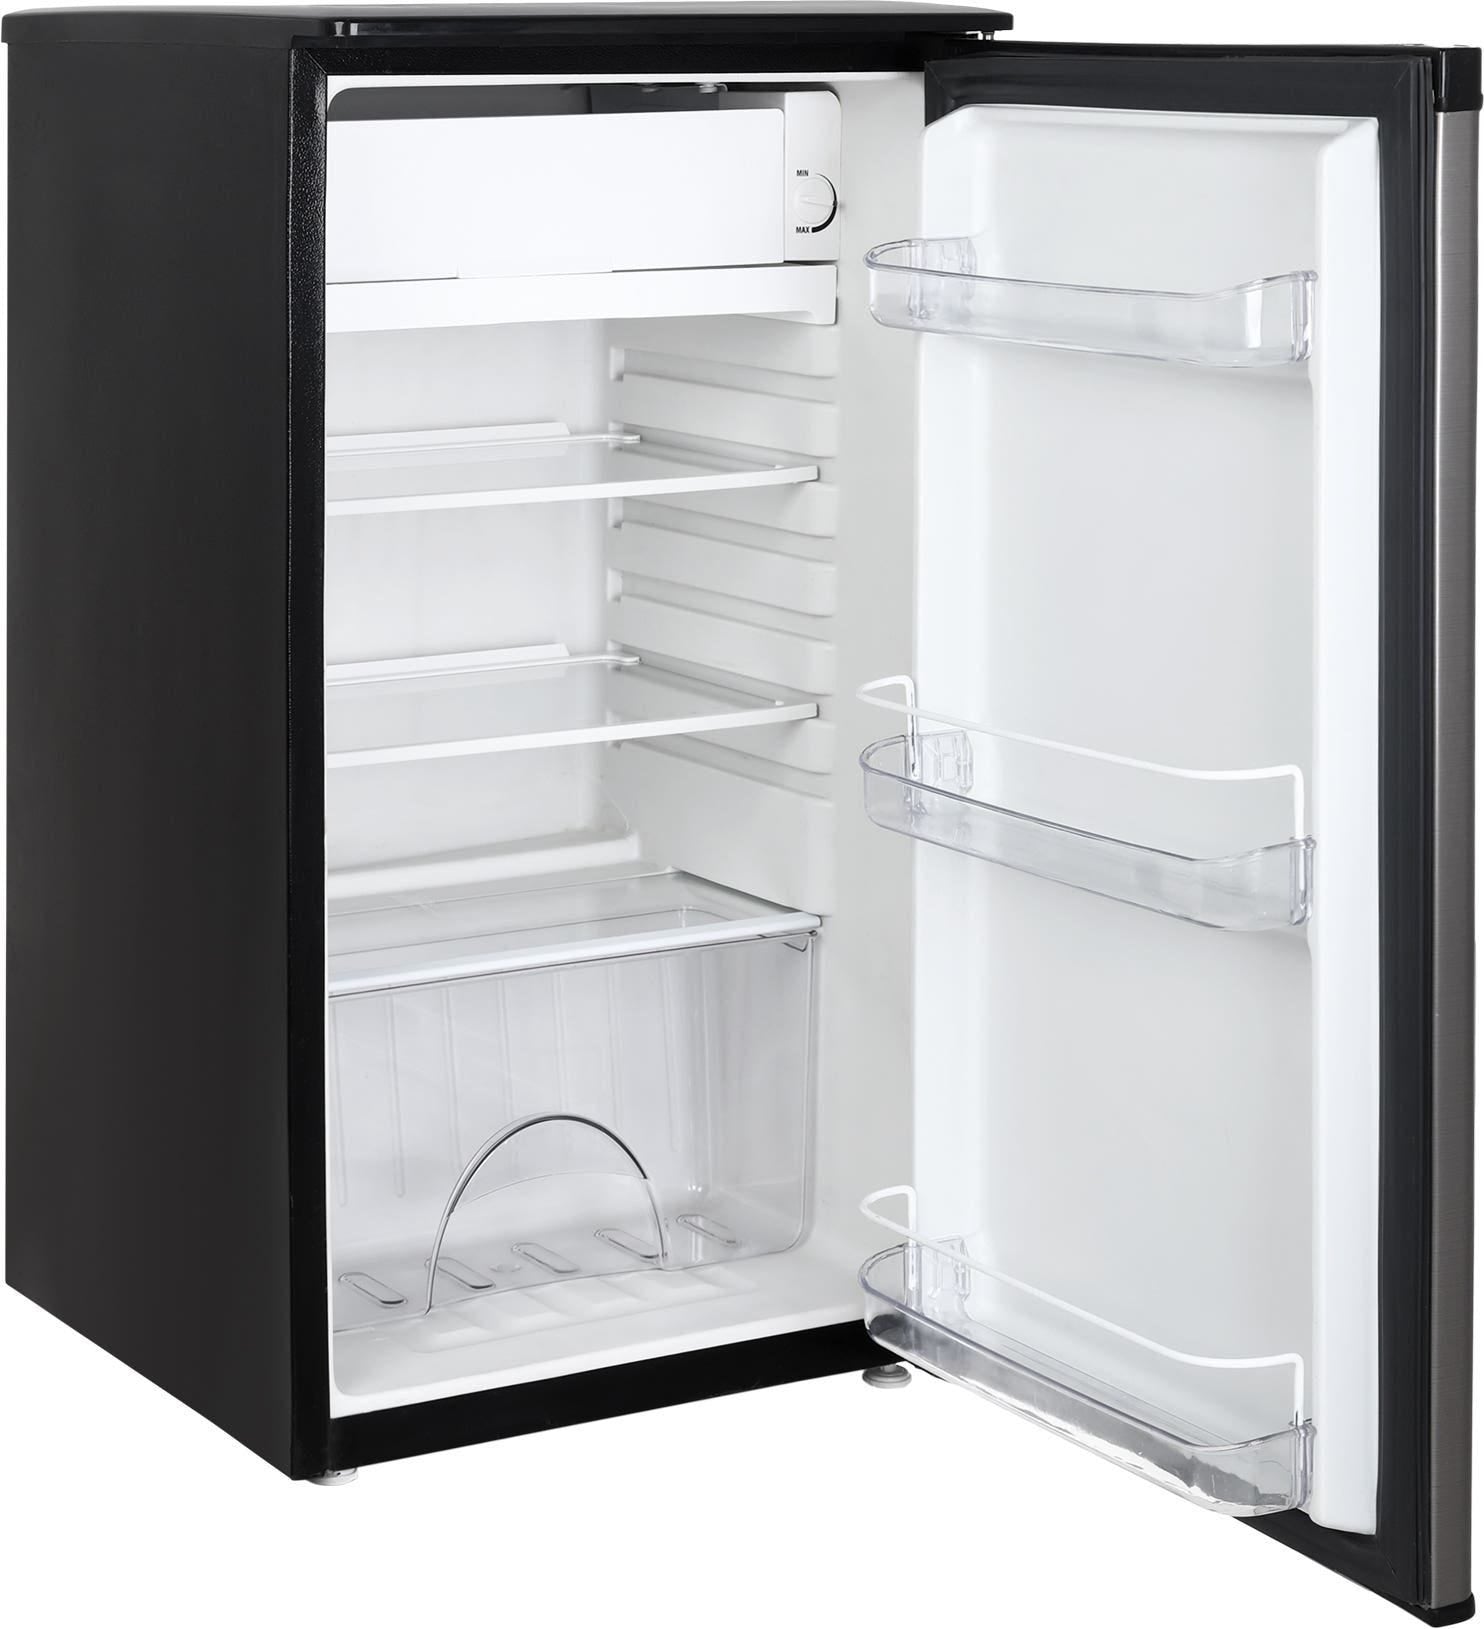 Castle Defrost Mini Bar Refrigerator, 97 Liters, Silver - FR1097KW